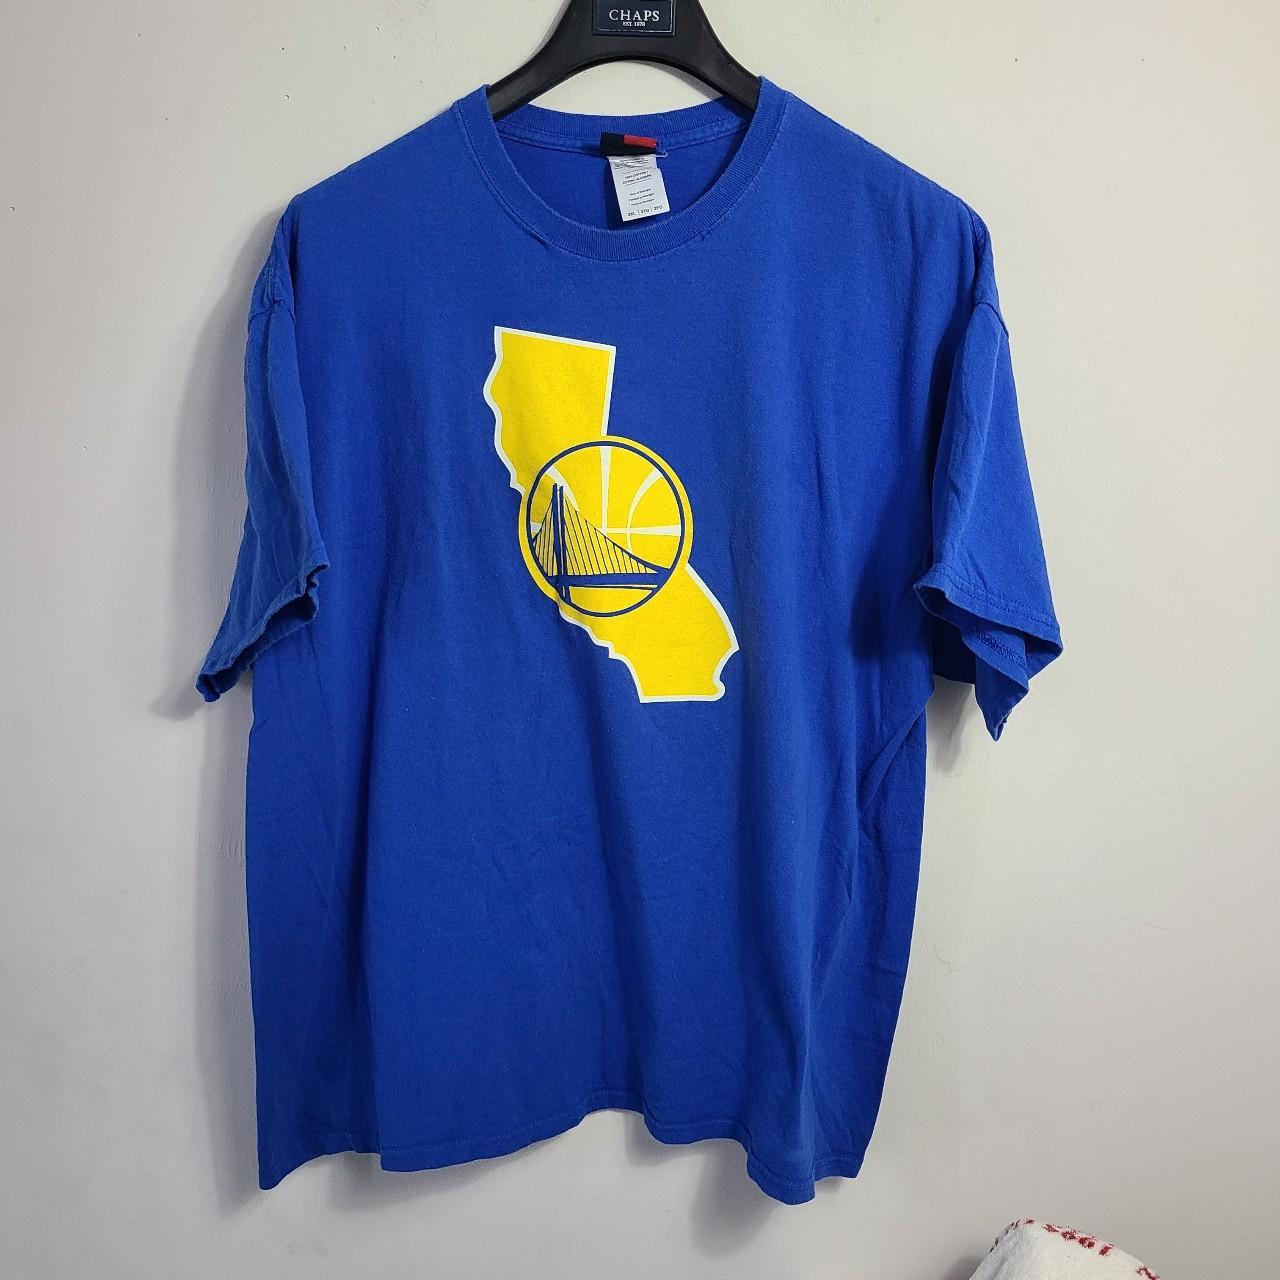 NBA Men's Blue and Yellow T-shirt (2)